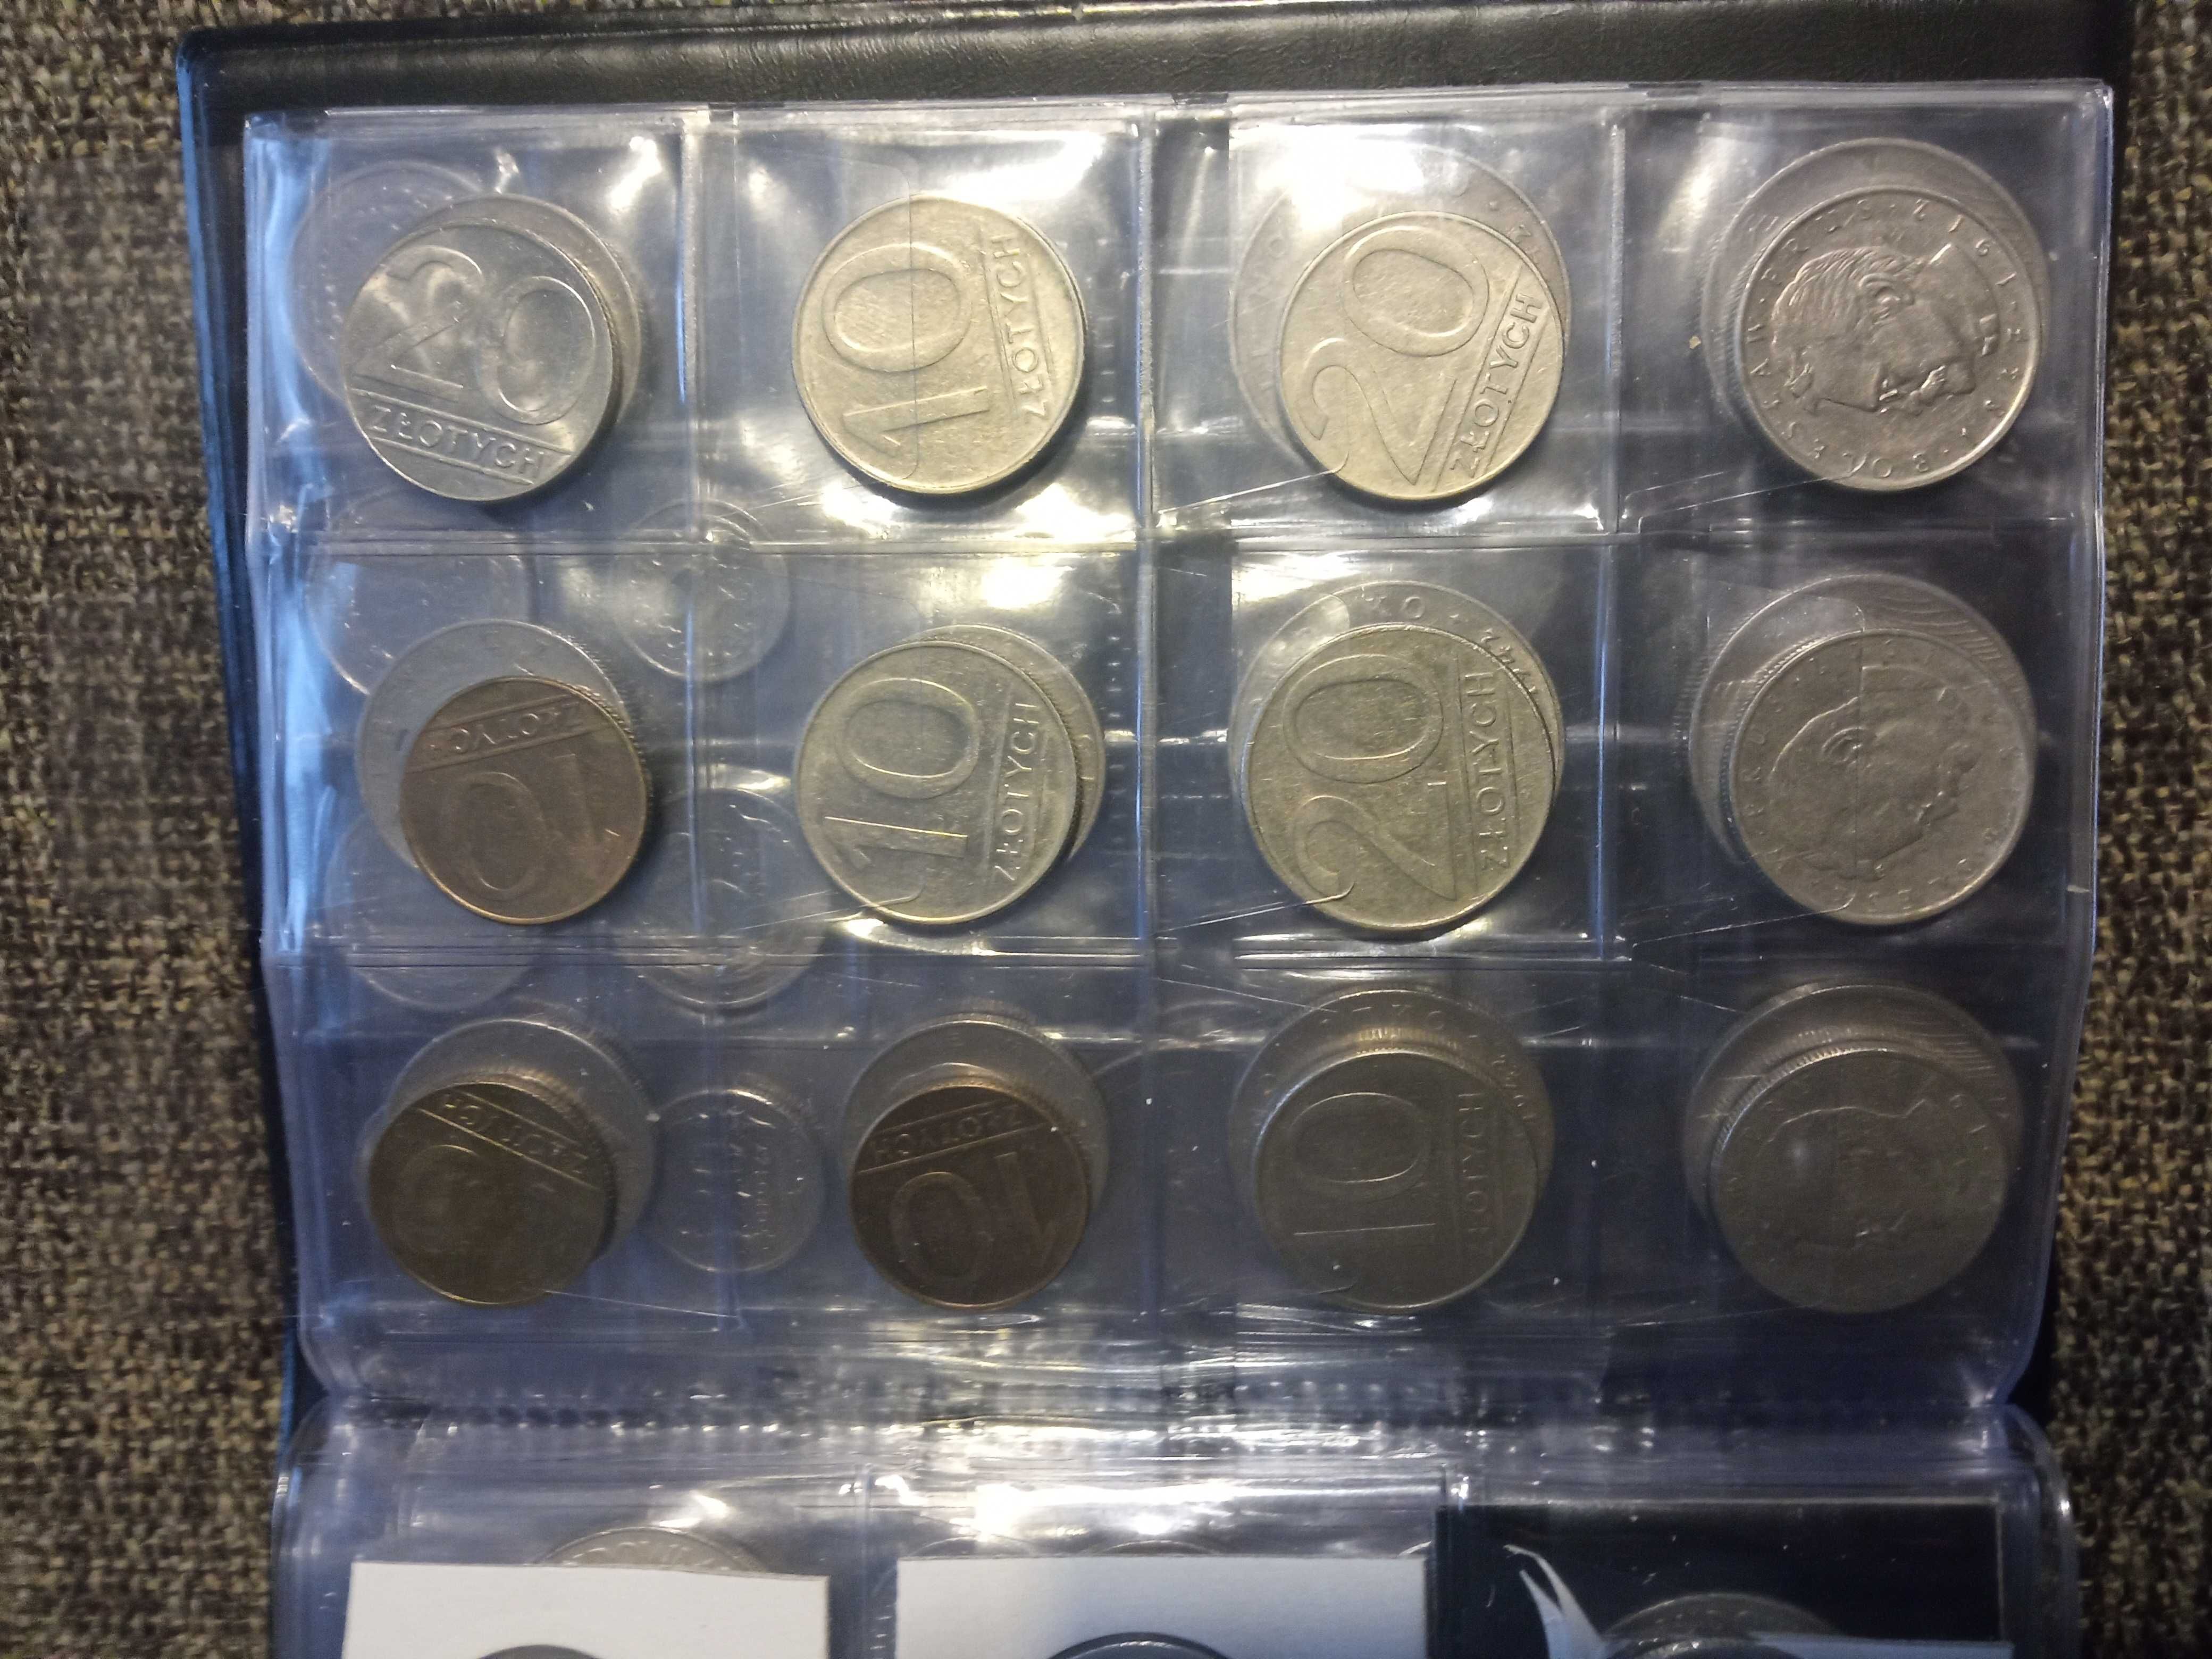 Kolekcja monet PRL